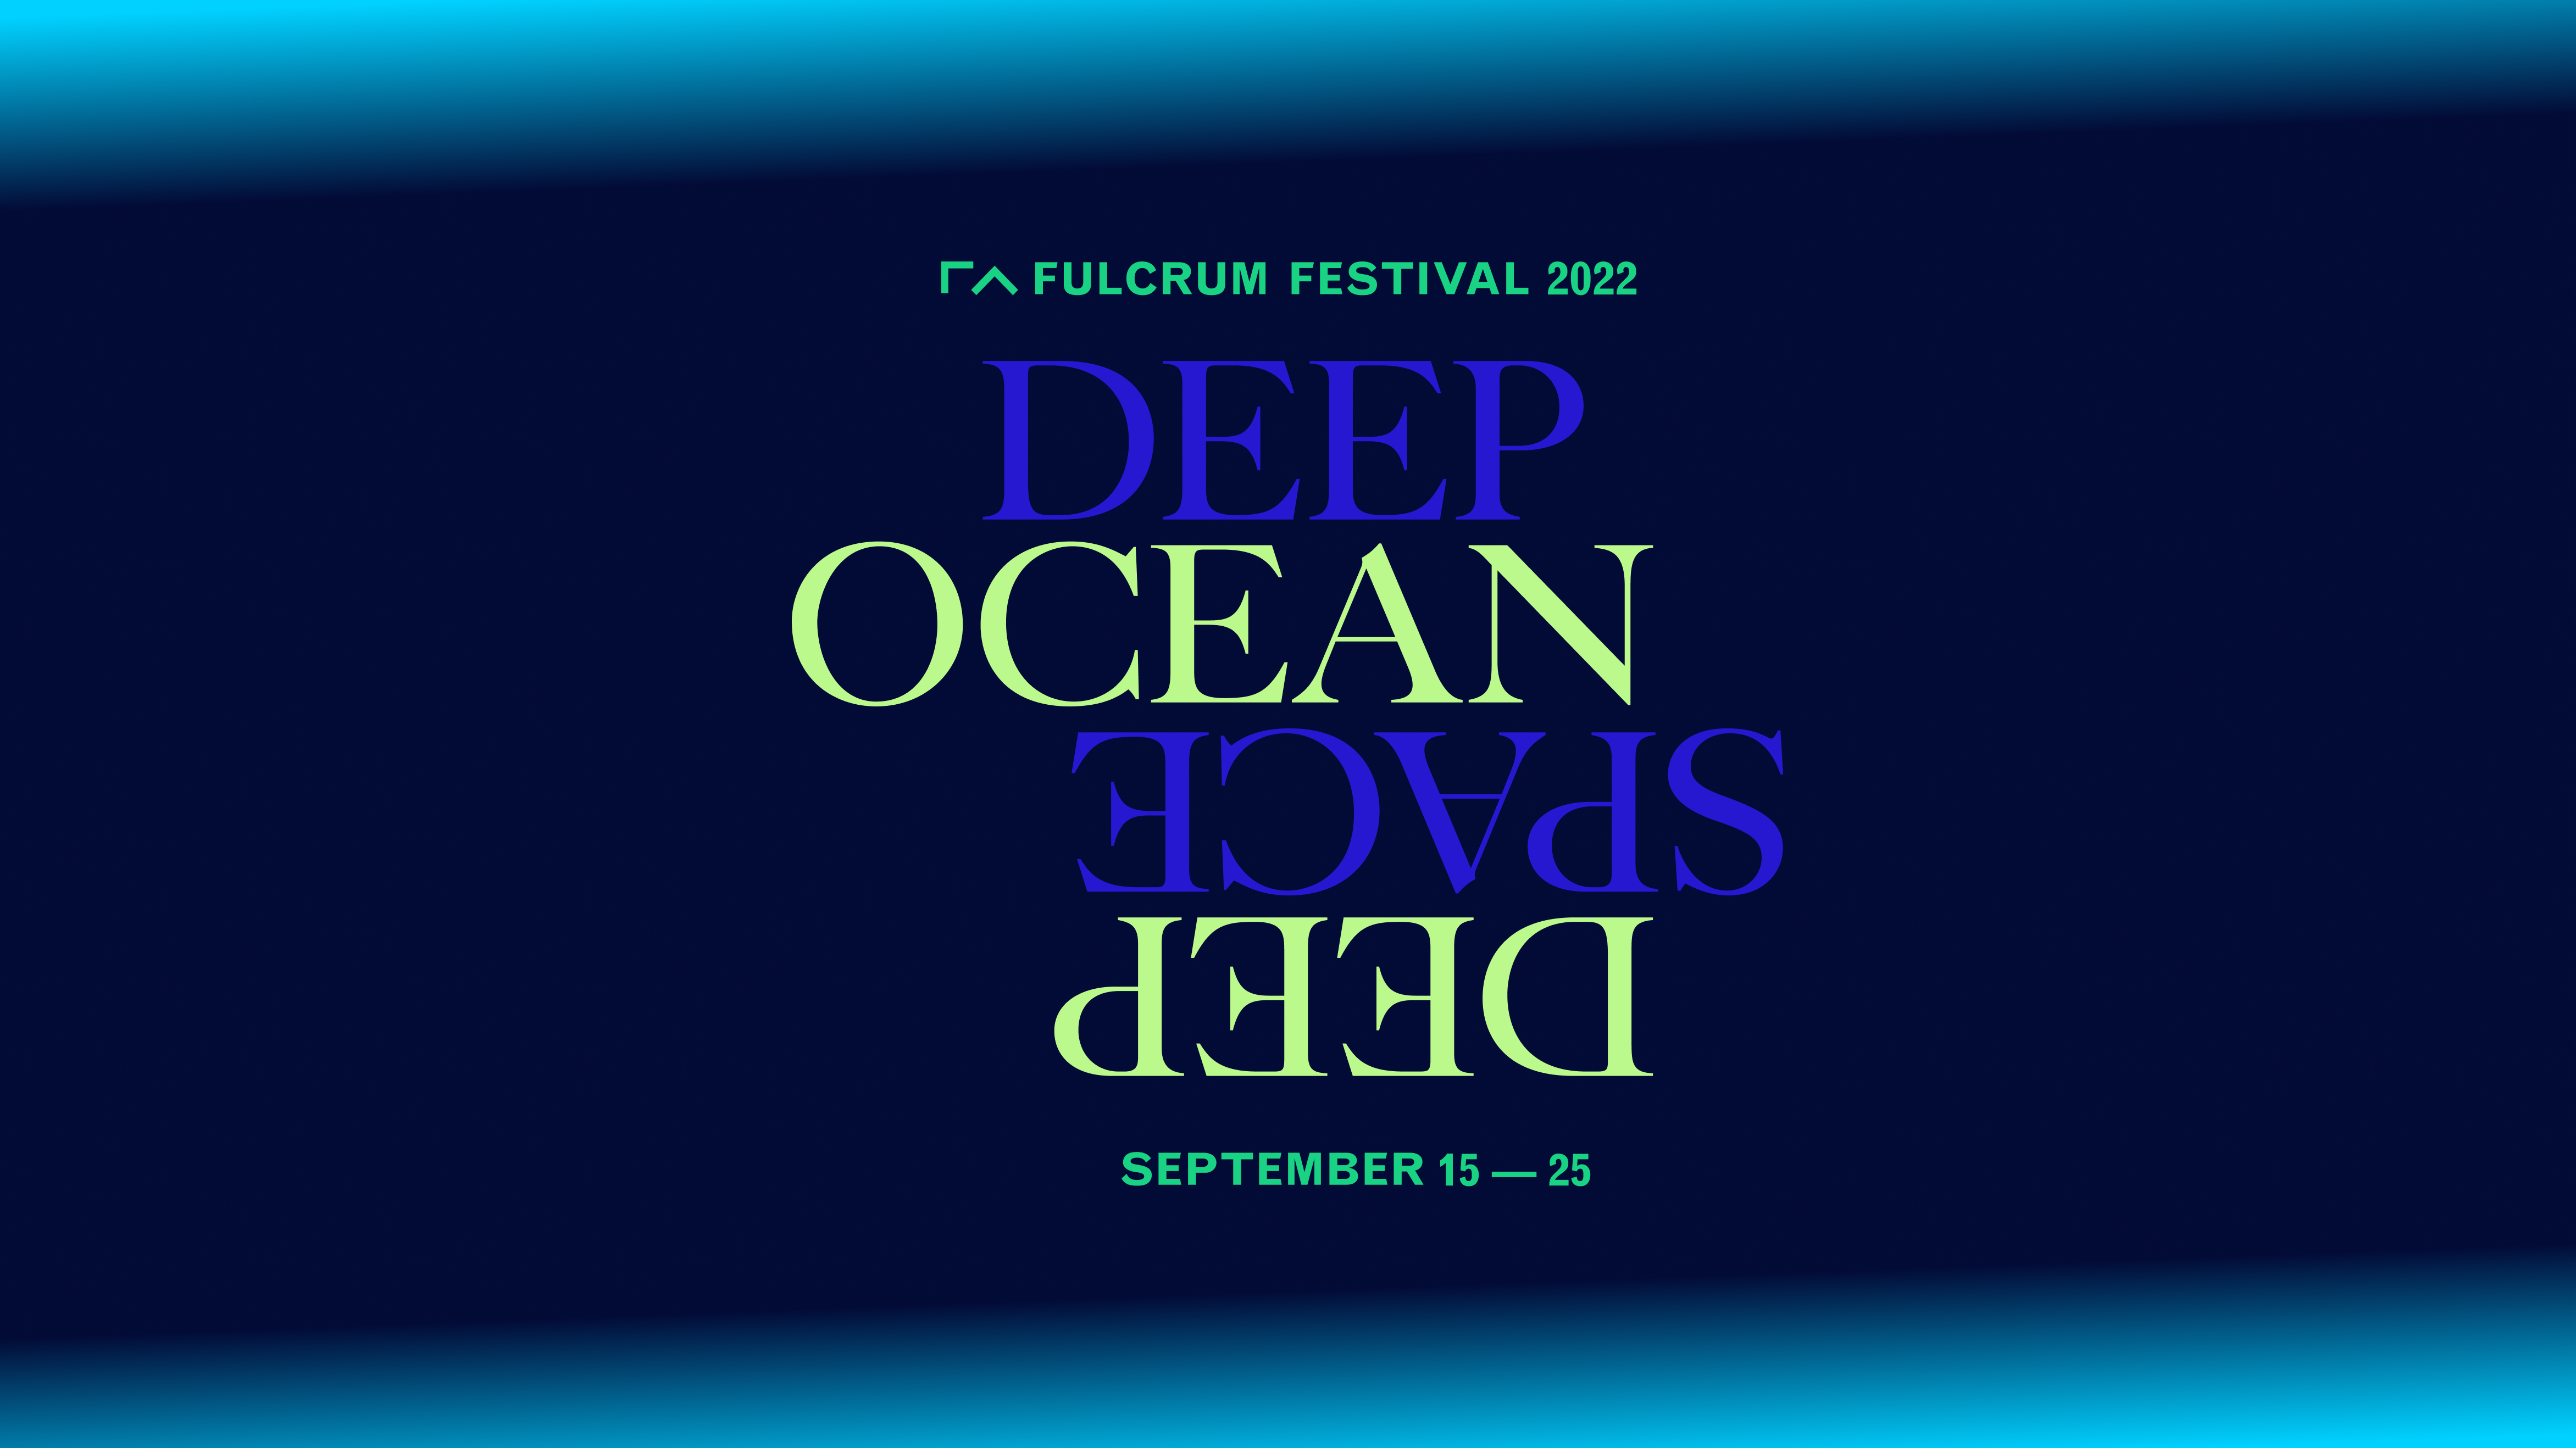 Fulcrum Festival logo on a blue gradient